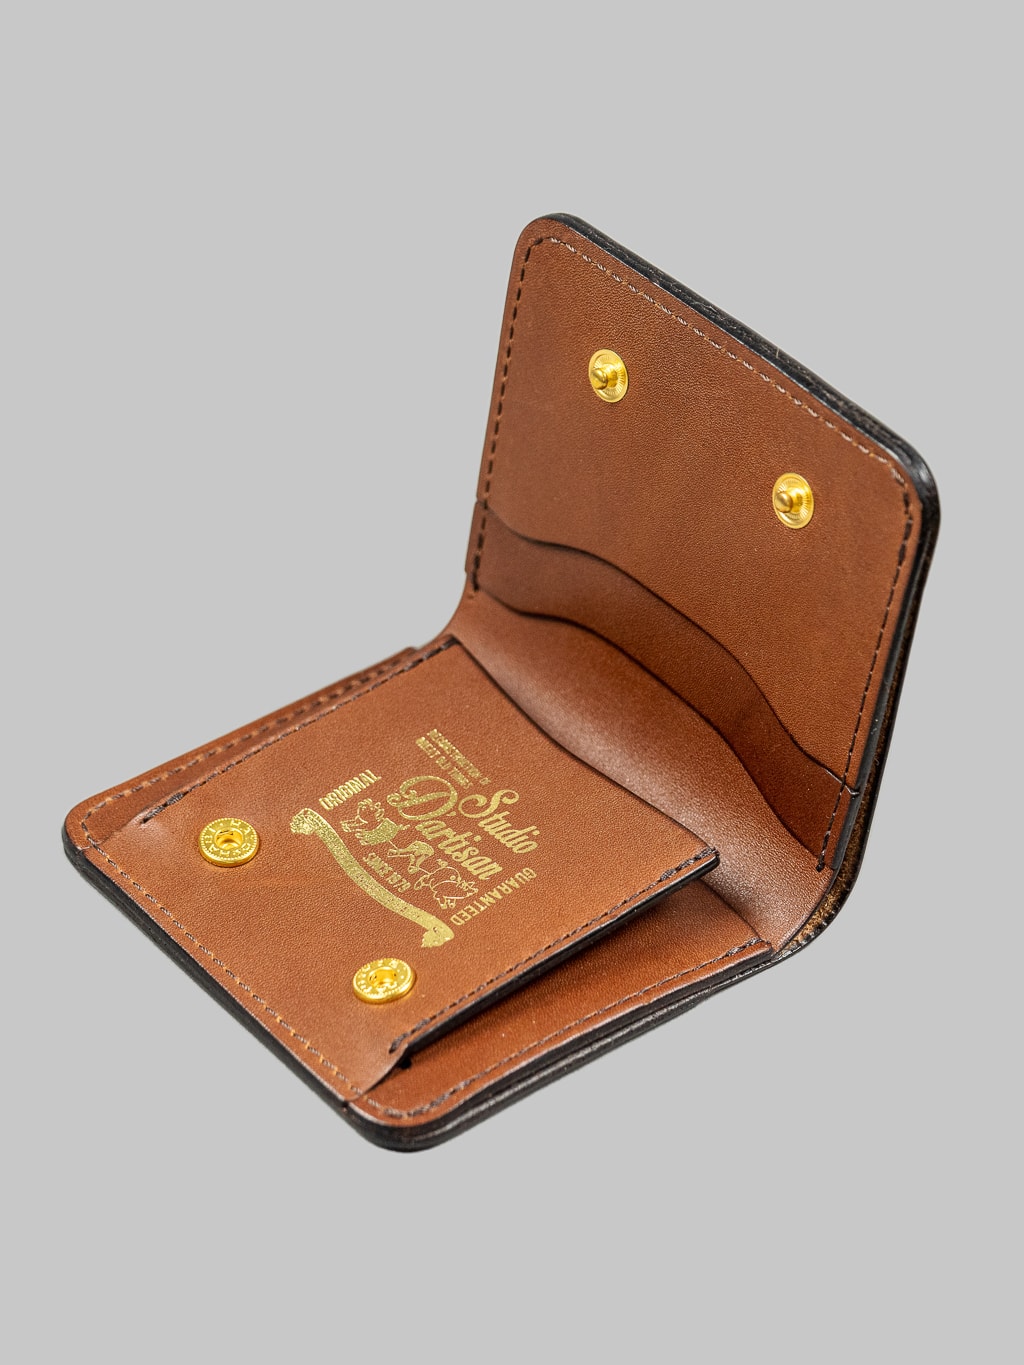 Studio Dartisan brown leather mini wallet interior details